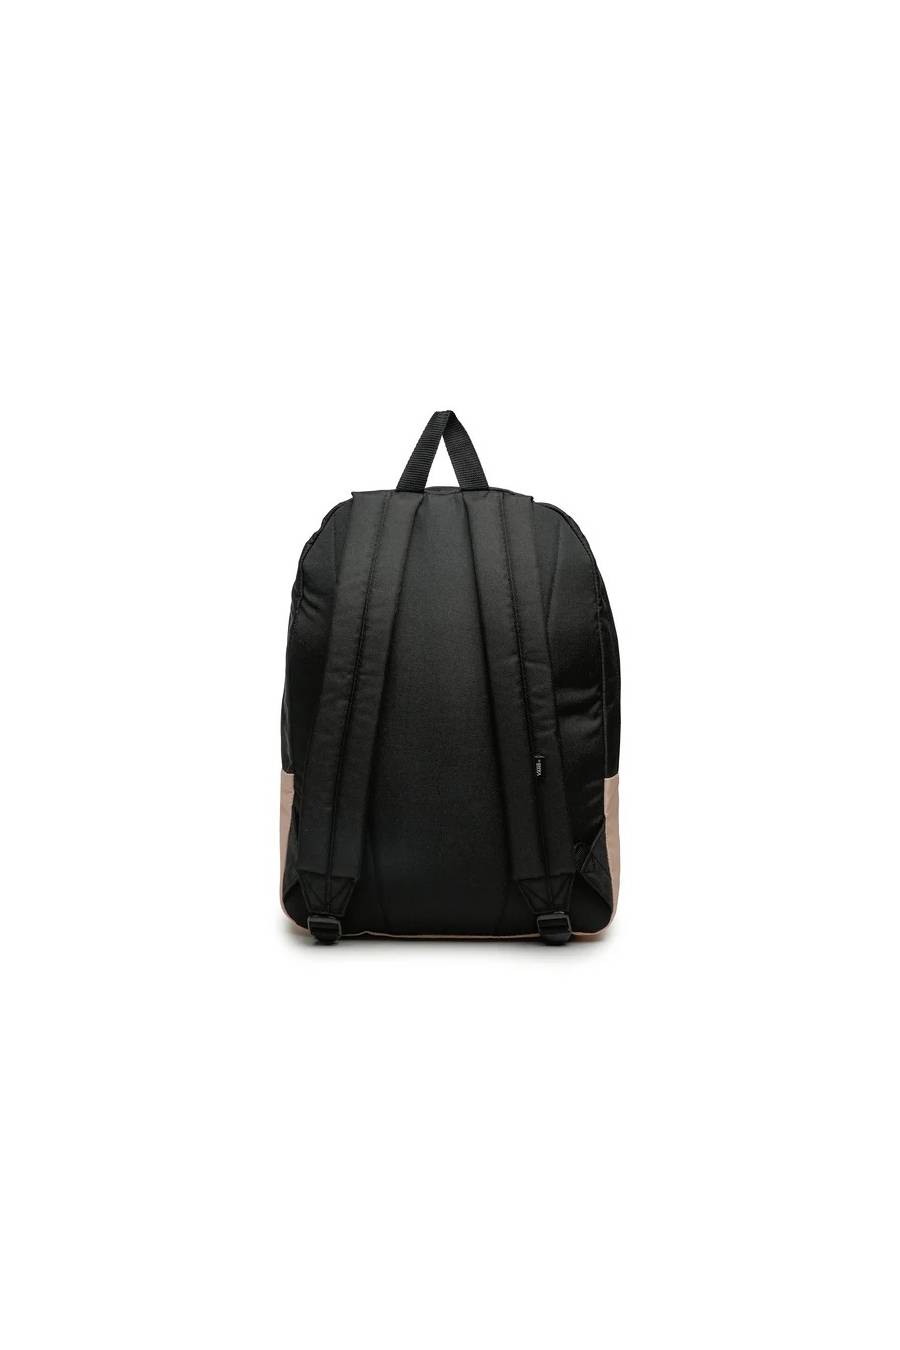 Mochila Vans Realm Backpack Tropical Peach VN0A3UI6N4N1